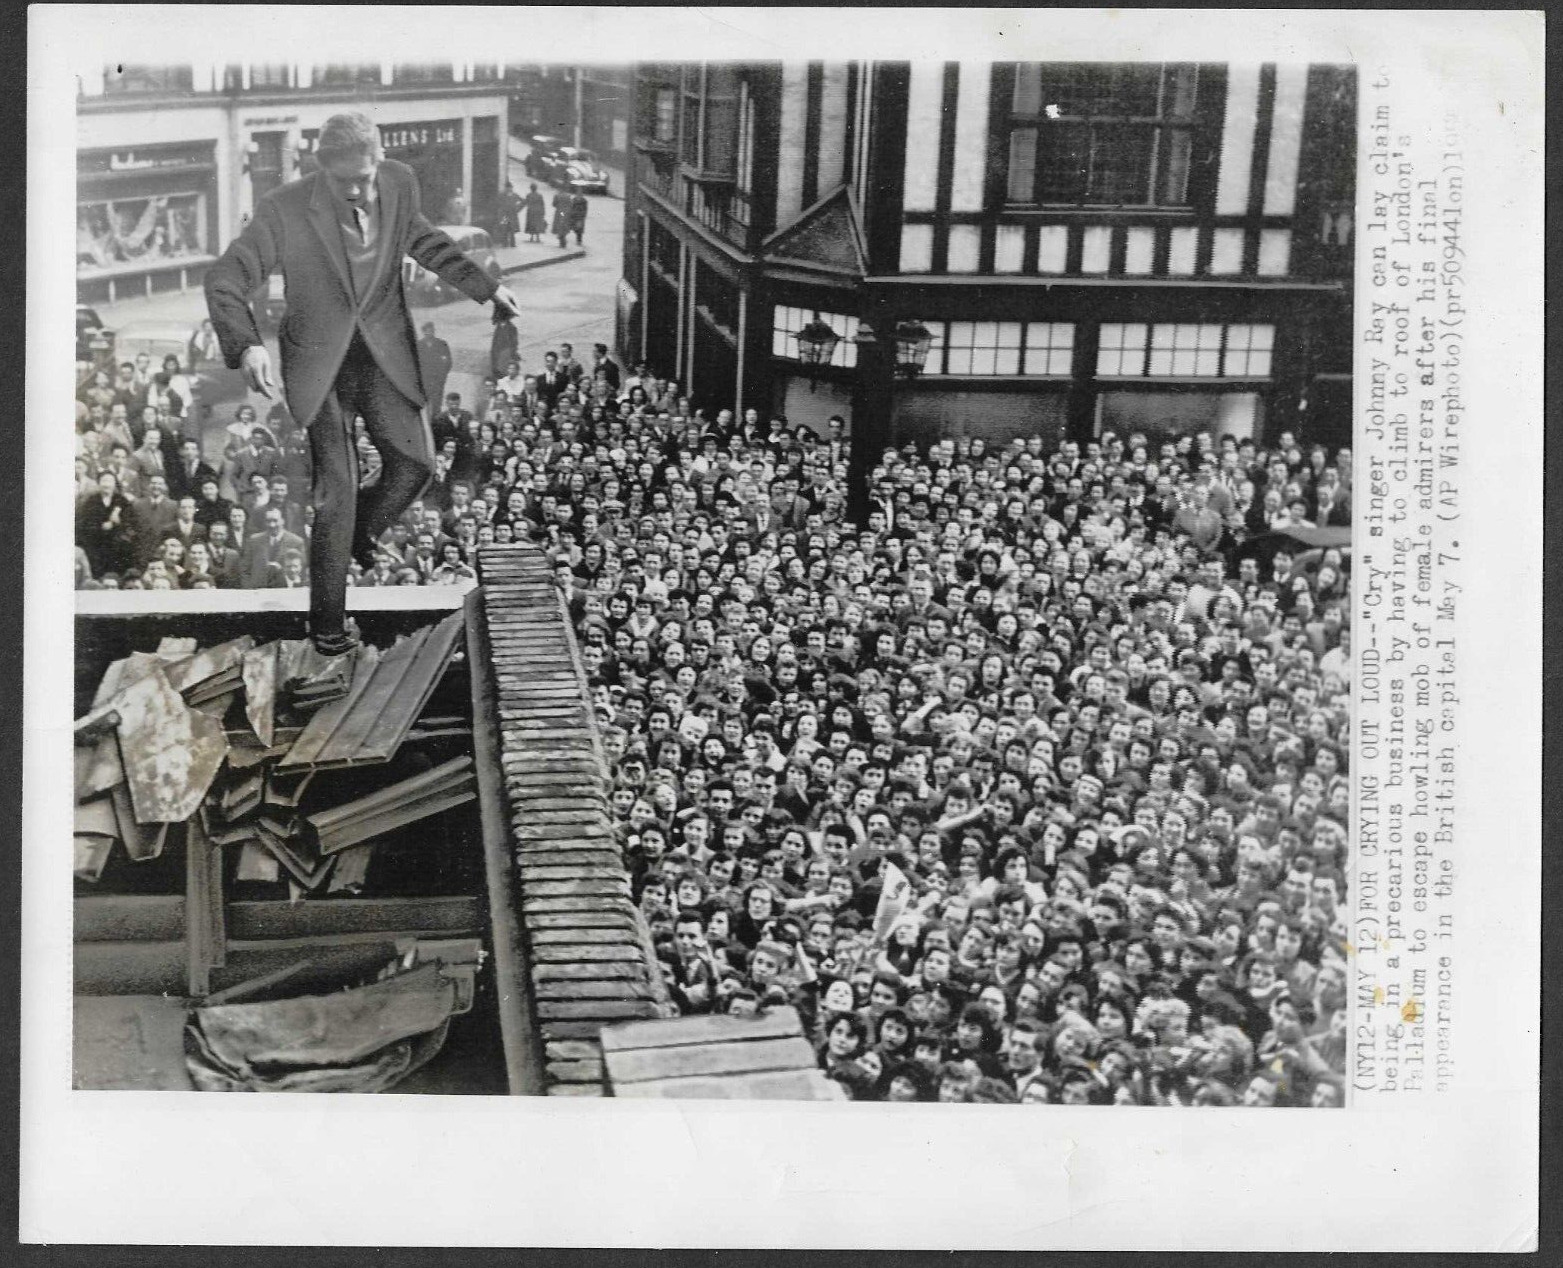 JOHNNY RAY SINGER VINTAGE ORIGINAL 1955 PRESS PHOTO